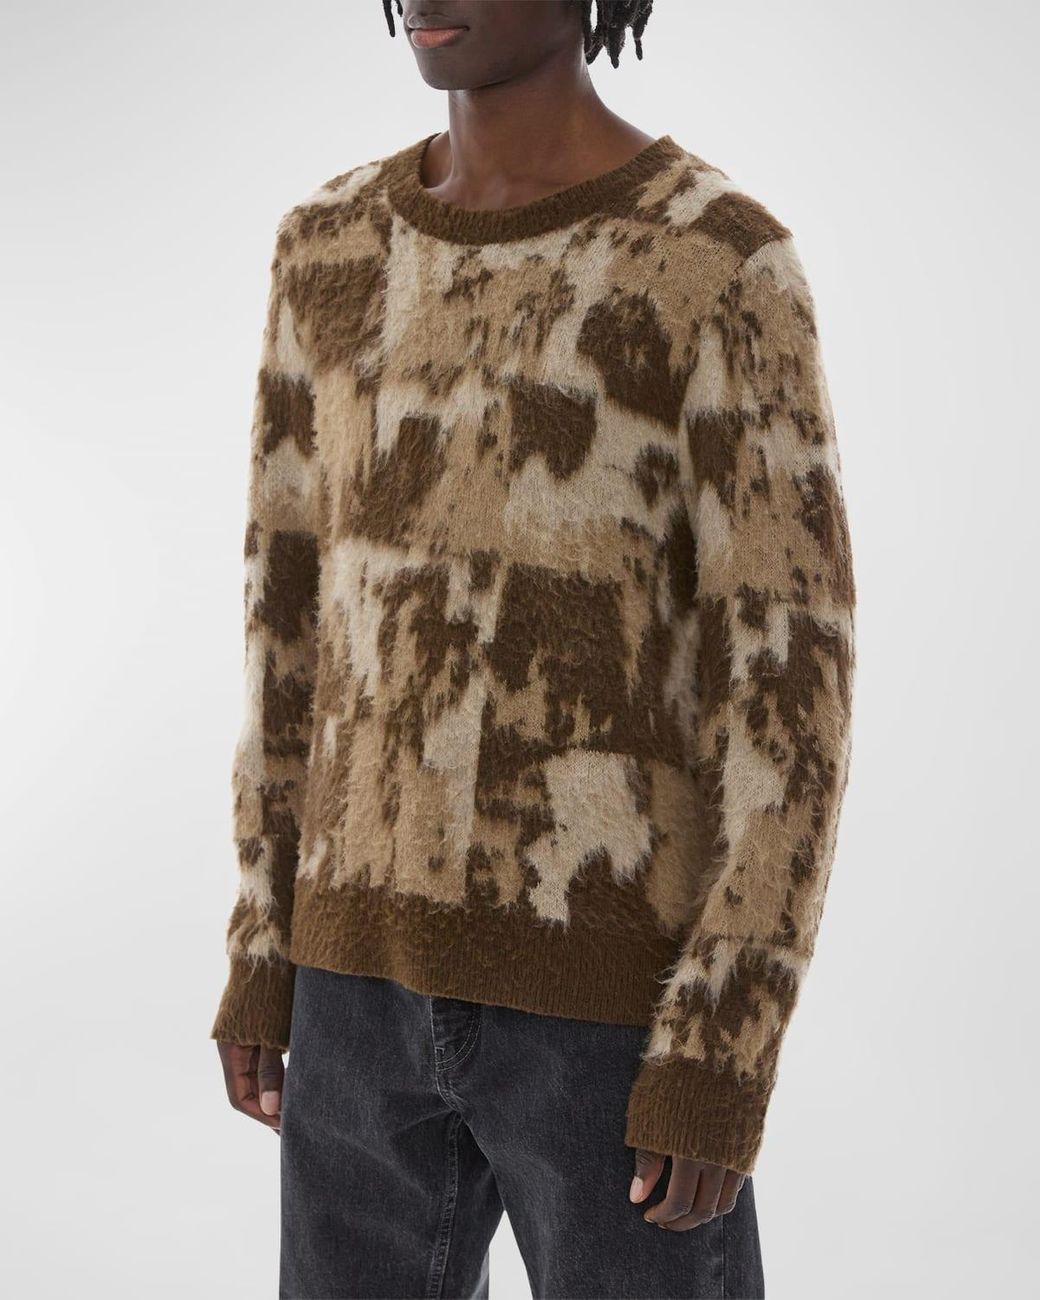 Helmut Lang Jacquard Crewneck Sweater